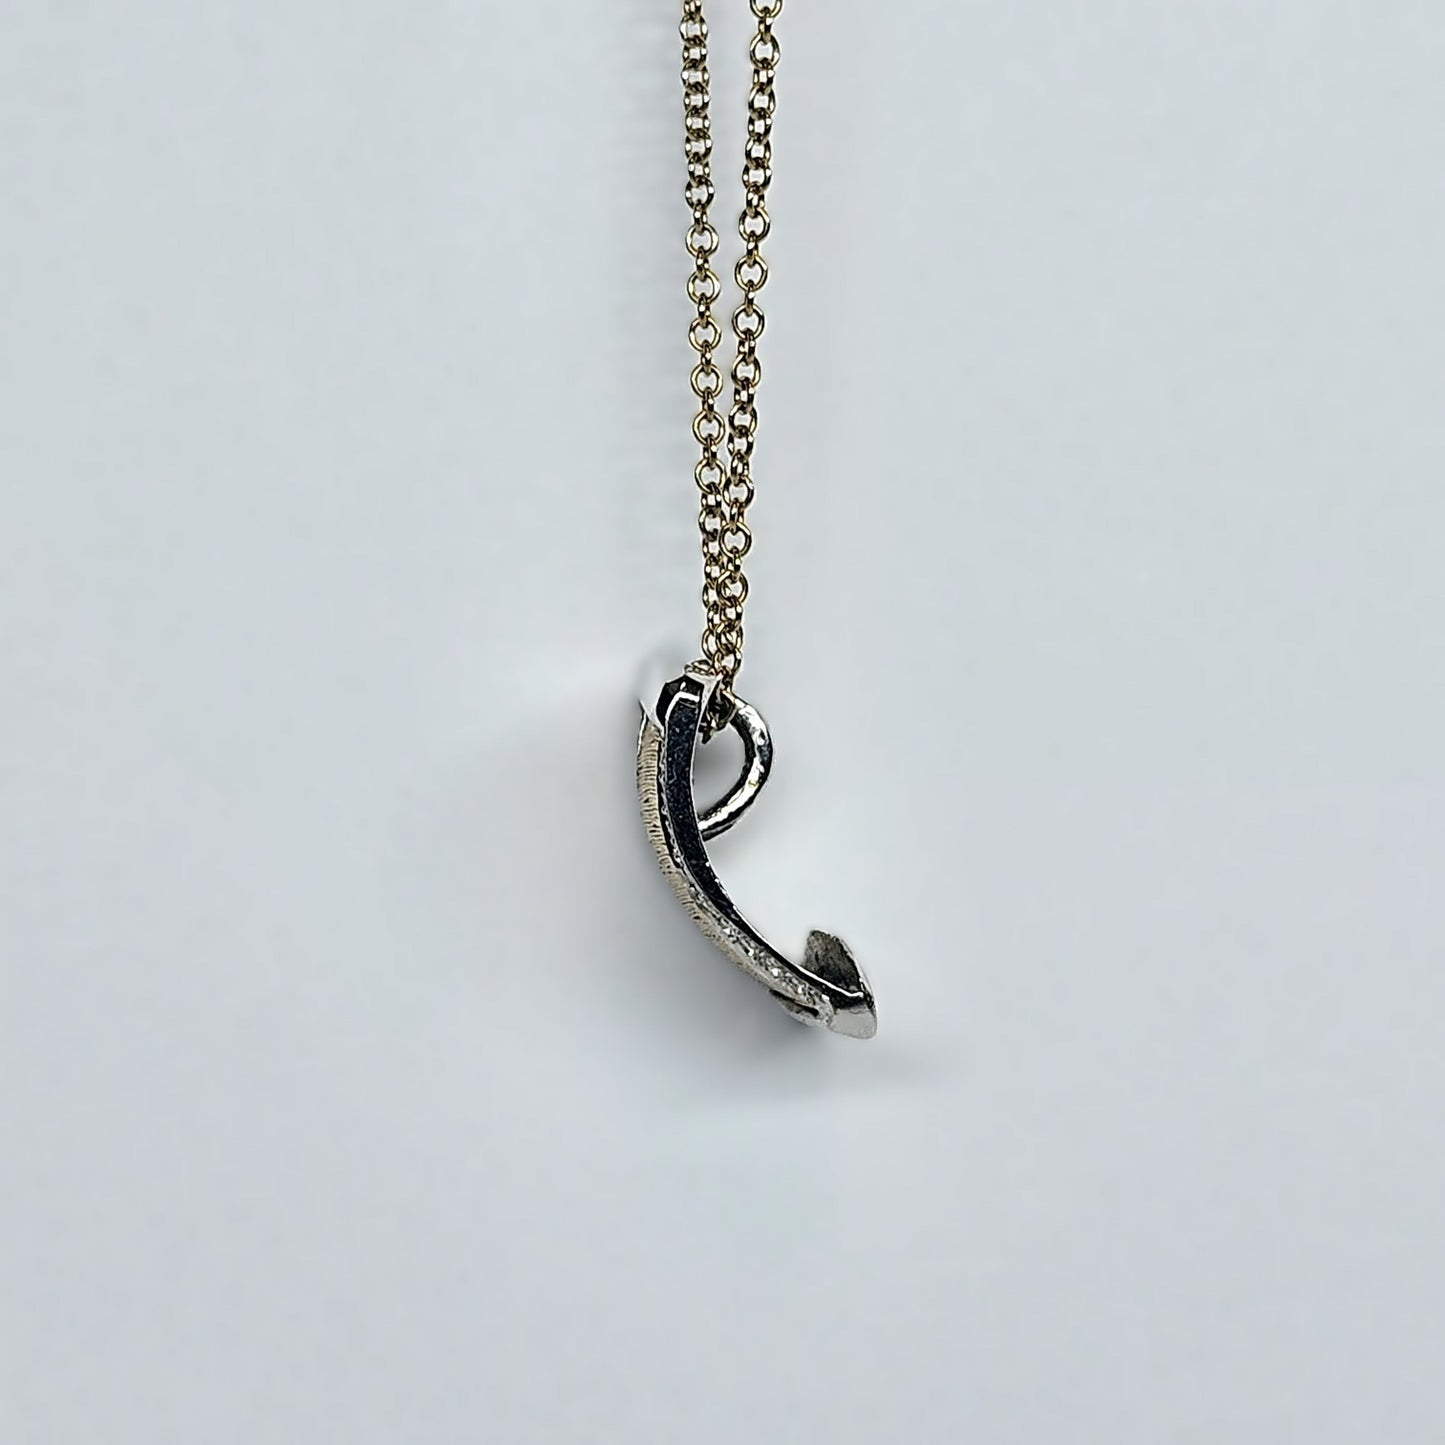 Woven, Diamond set pendant with chain.